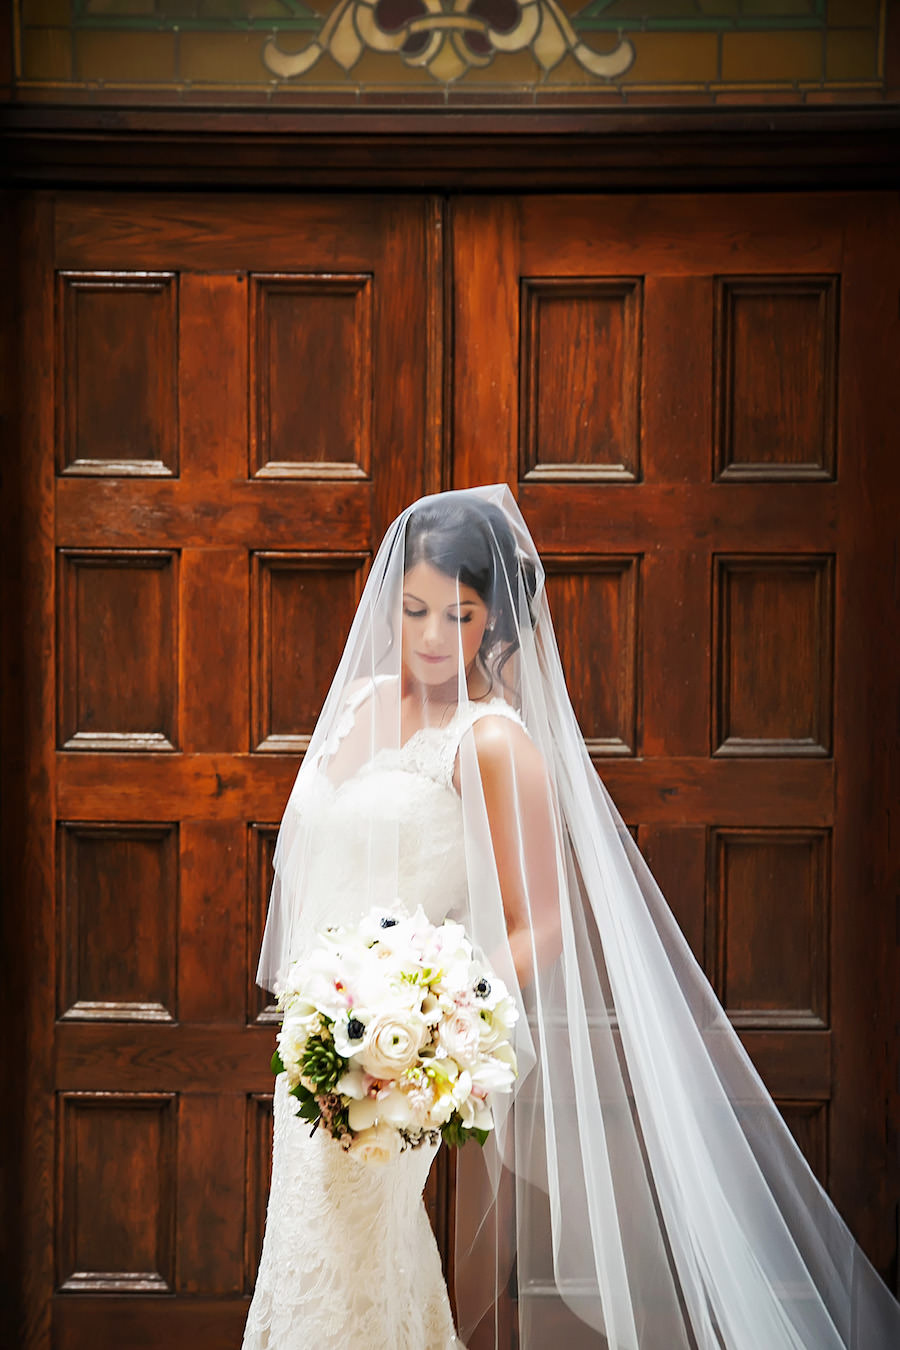 Bridal Wedding Portrait in Ivory, Lace Romona Keveza Wedding Dress | Tampa Wedding Dress Shop Isabel O'Neil Bridal | Tampa Wedding Photographer Limelight Photography